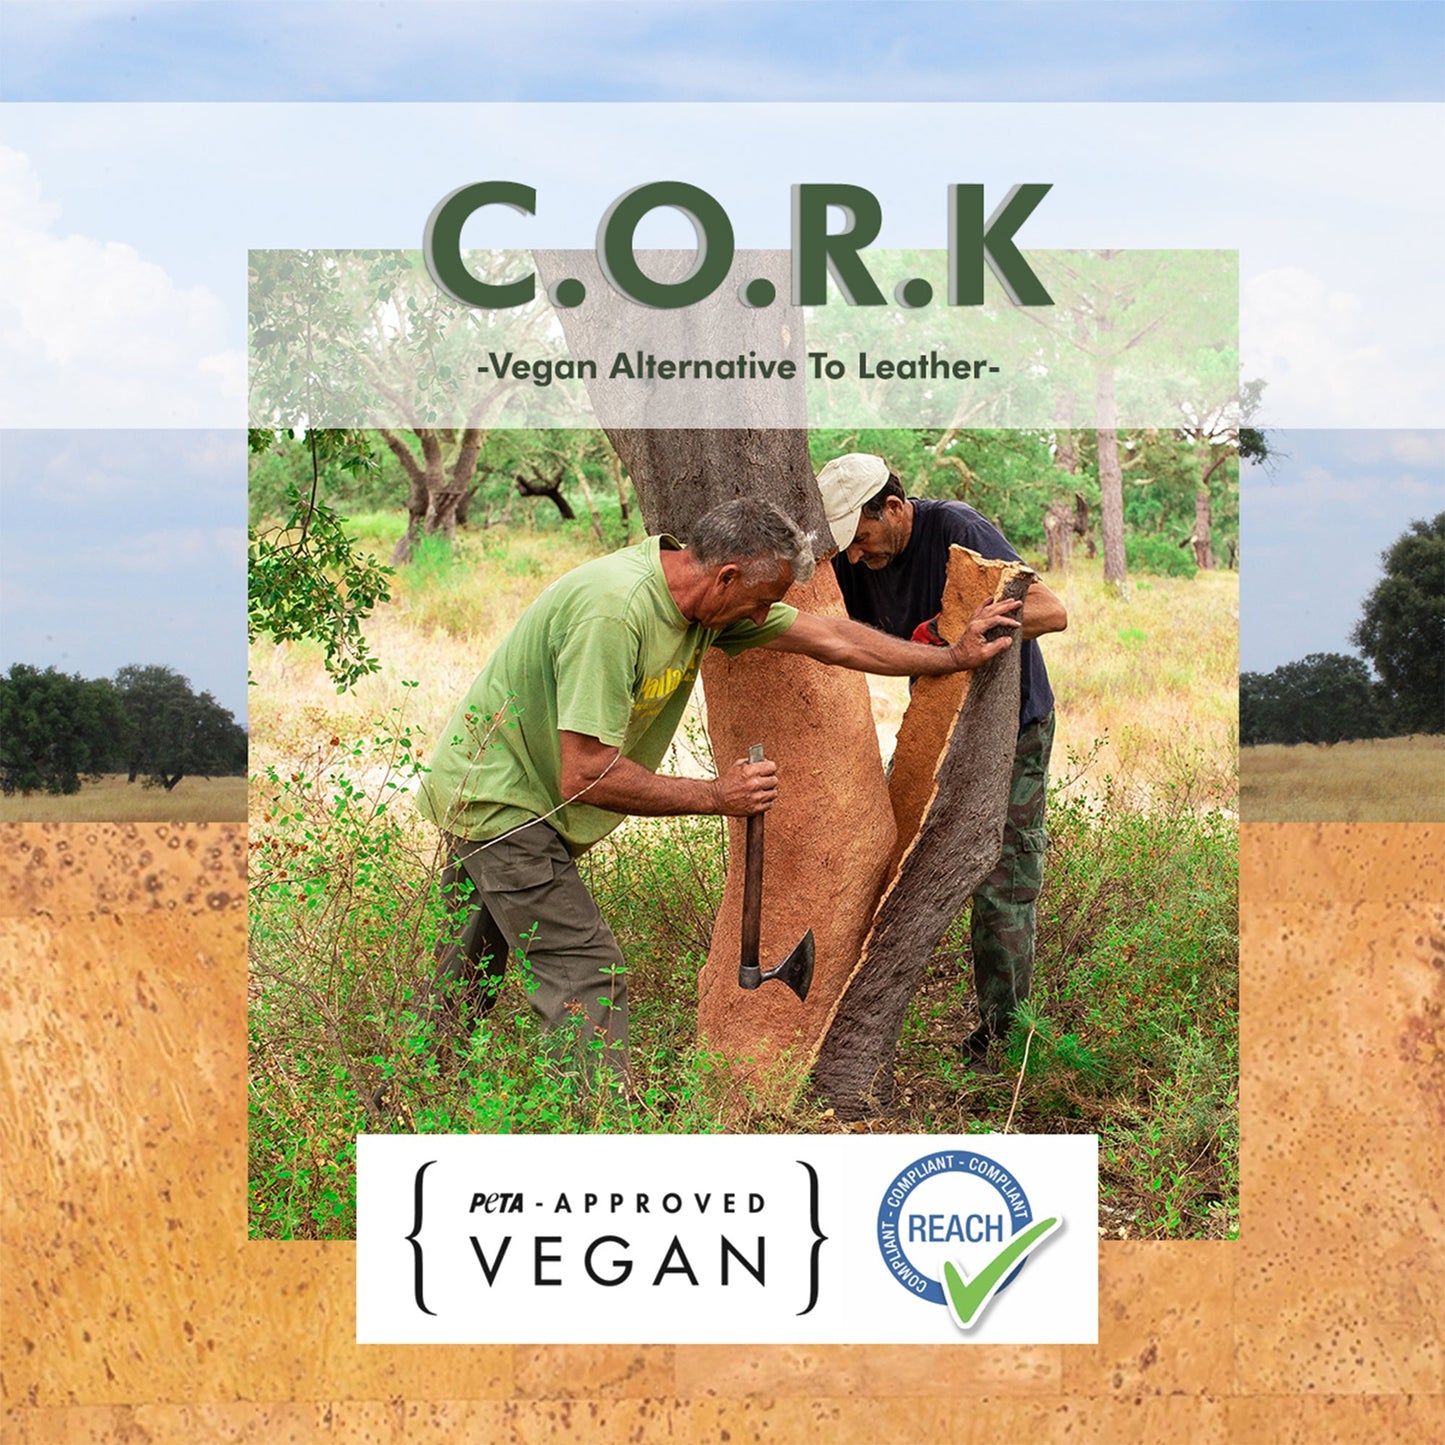 Natural Cork Geometric Chain Crossbody Vegan Bag | THE CORK COLLECTION